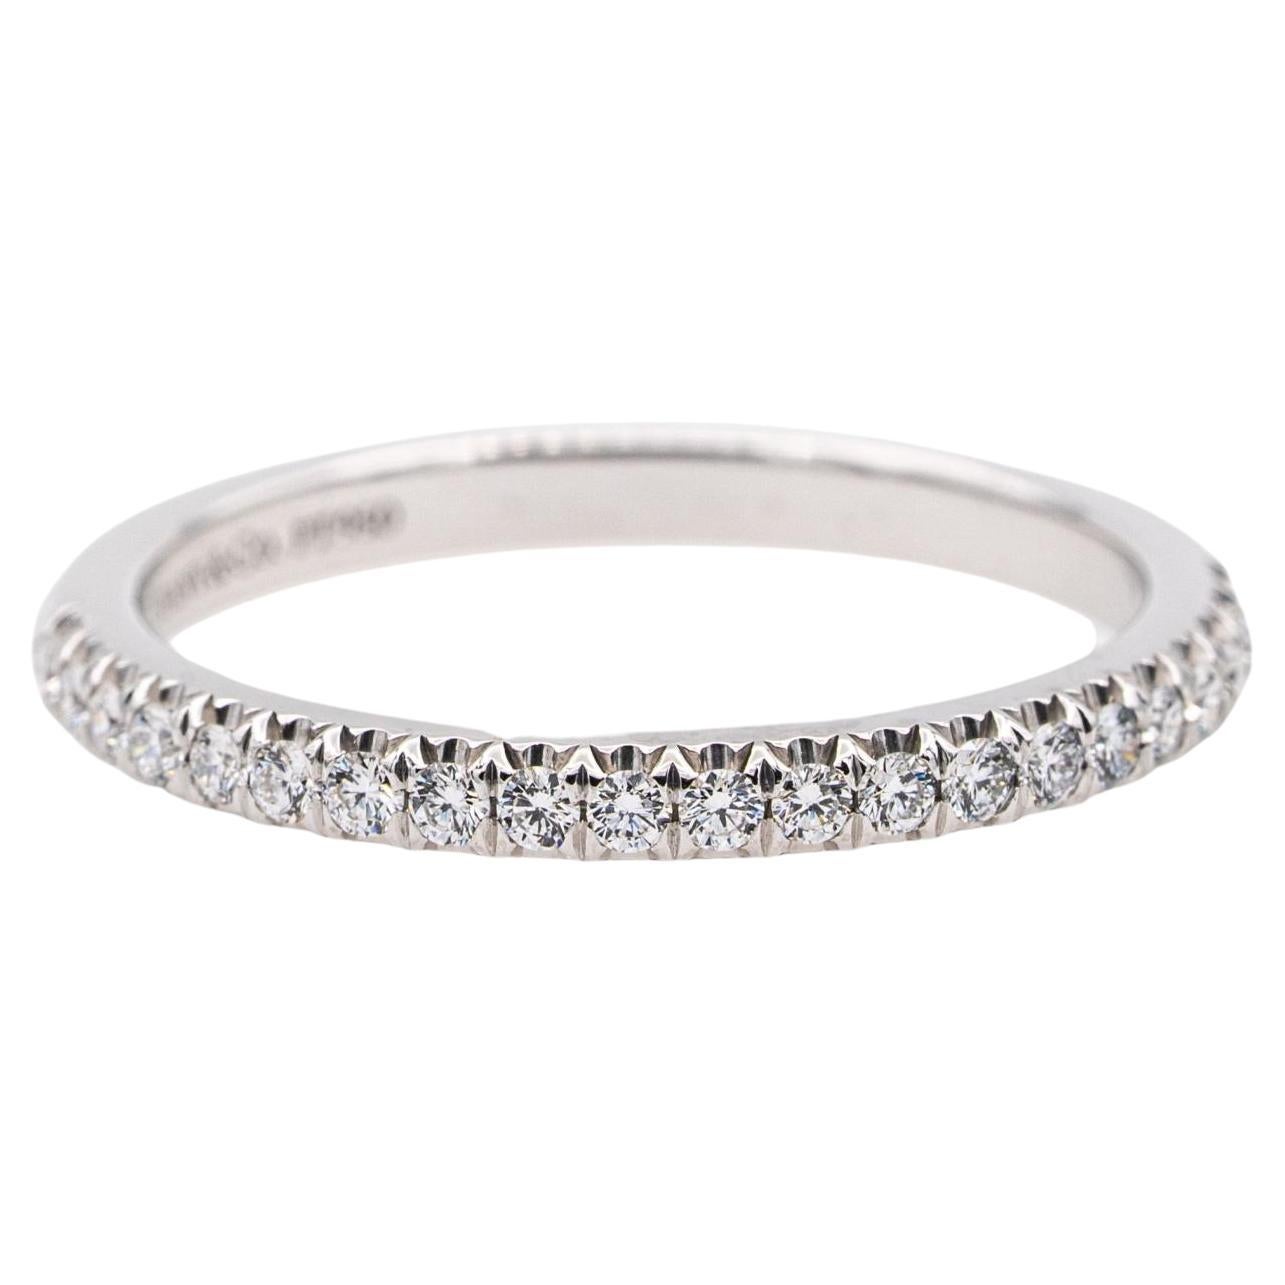 Tiffany & Co. Platinum Soleste Half Circle Band Ring Round Diamond 0.17cts Total